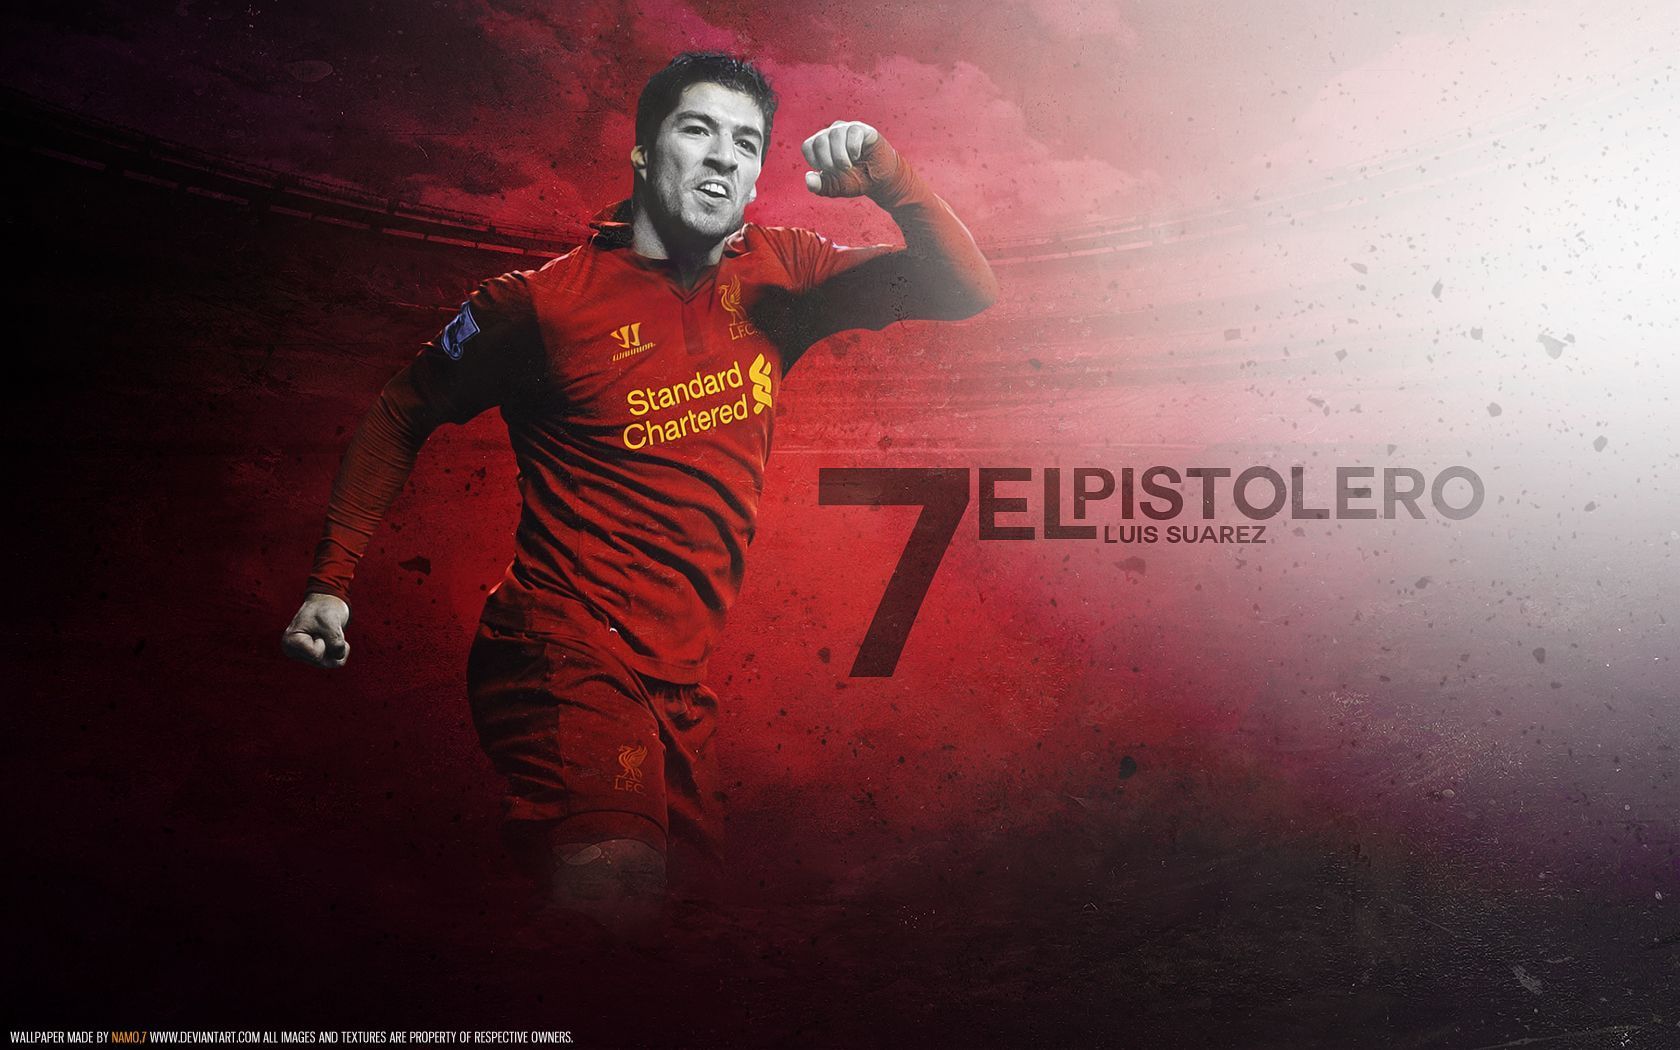 Luis Suarez 7 Liverpool by namo,7 by 445578gfx on DeviantArt